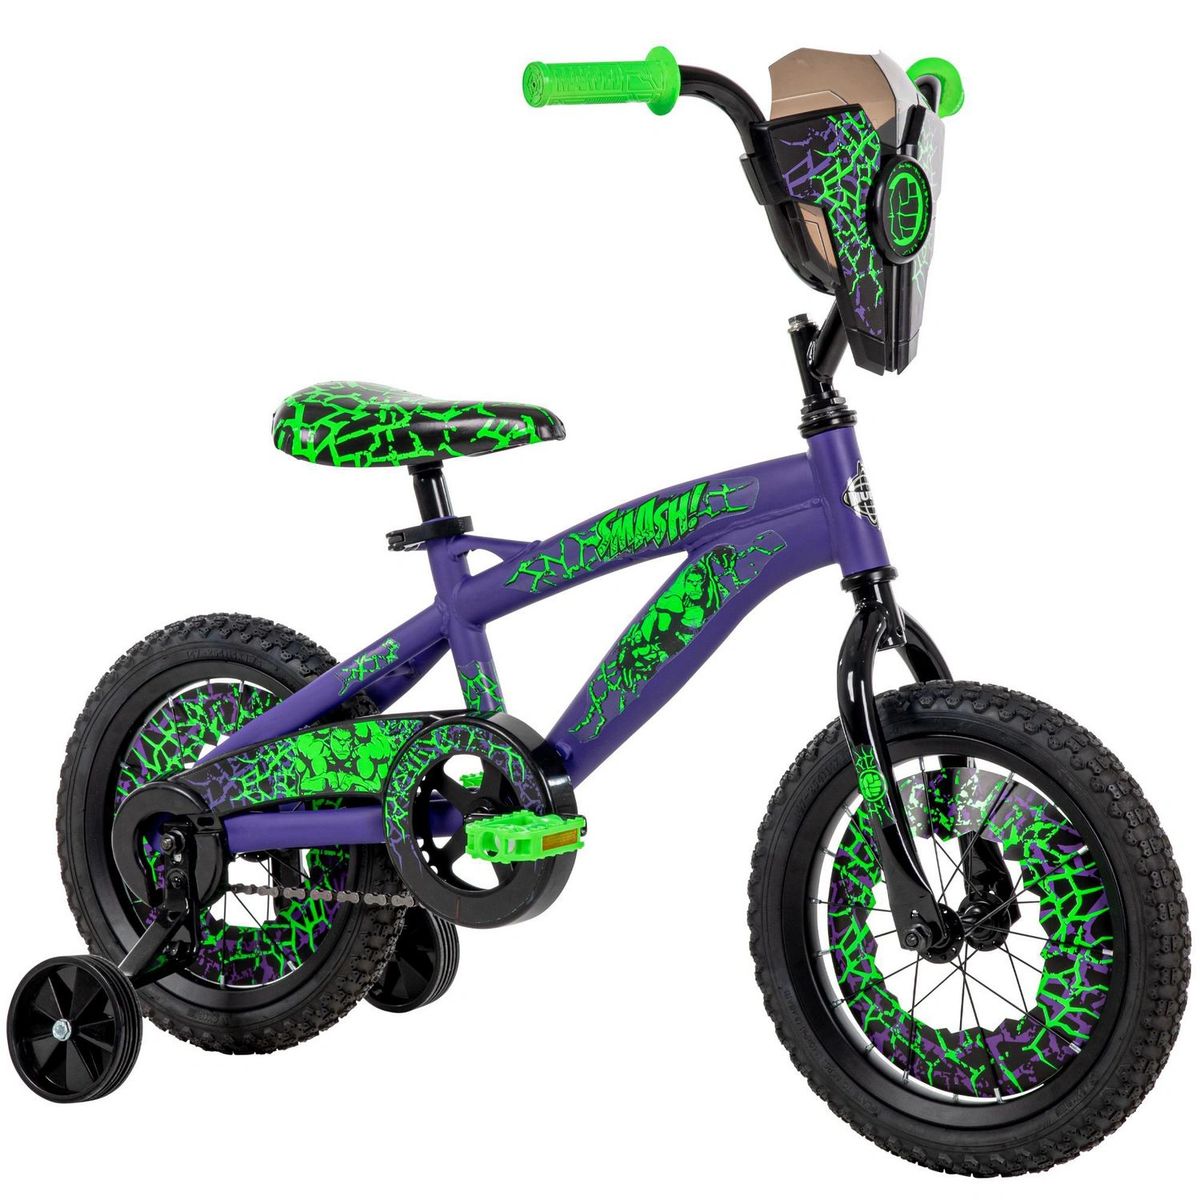 NEUF..Vélo 14 pouces Marvel The Hulk pour garçons, violet/vert, par Huffy